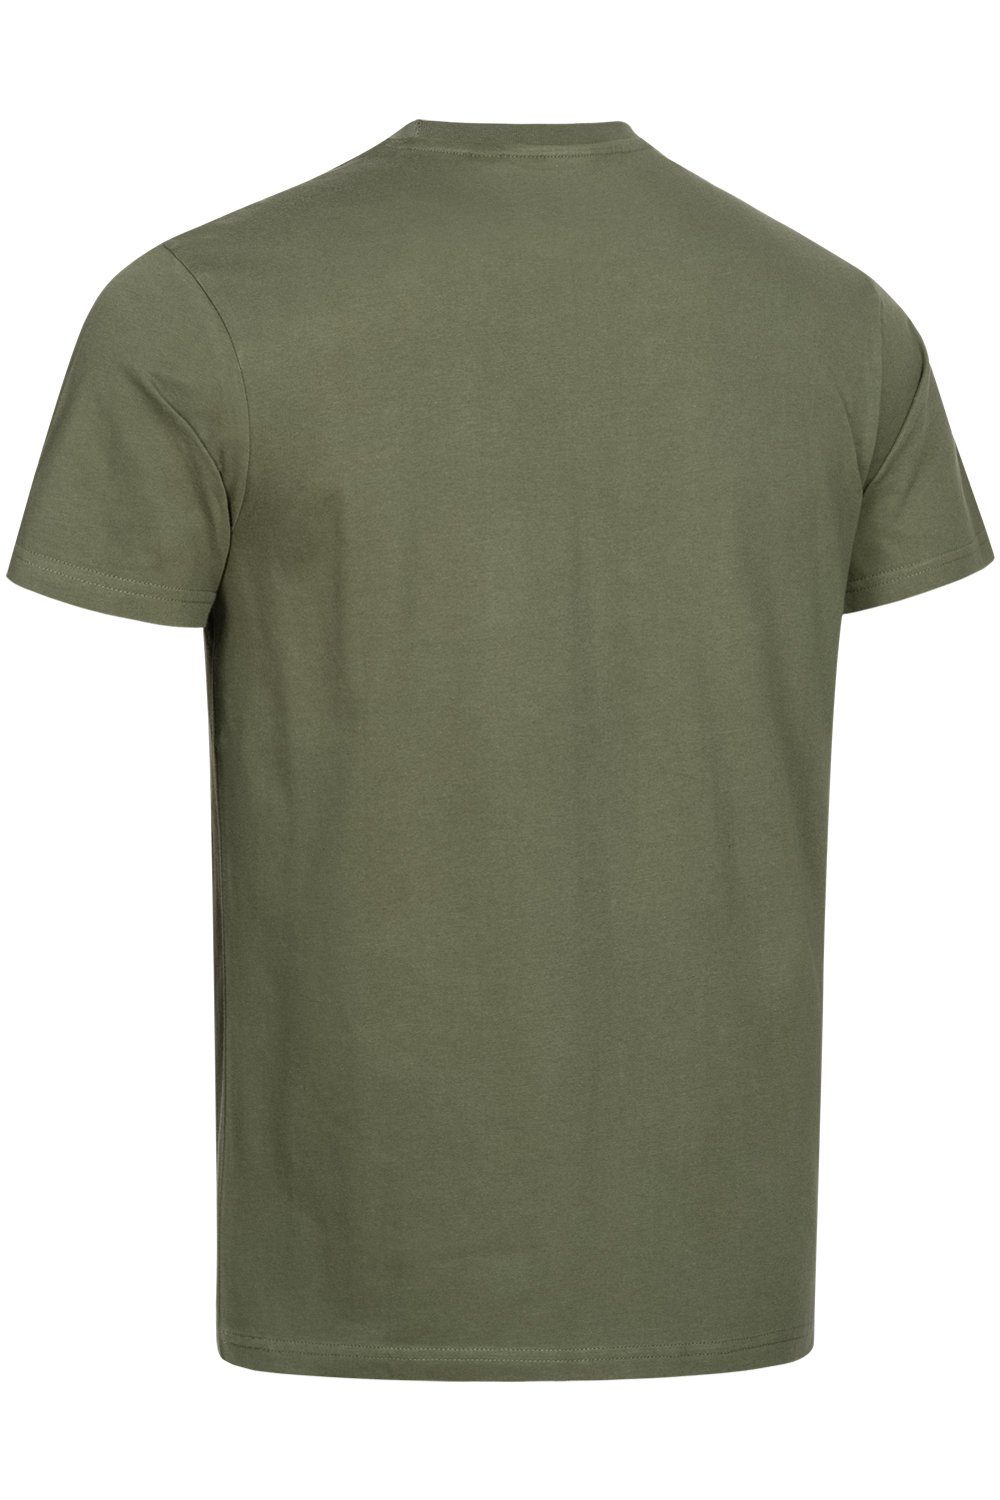 Lonsdale T-Shirt BLAIRMORE Green/White